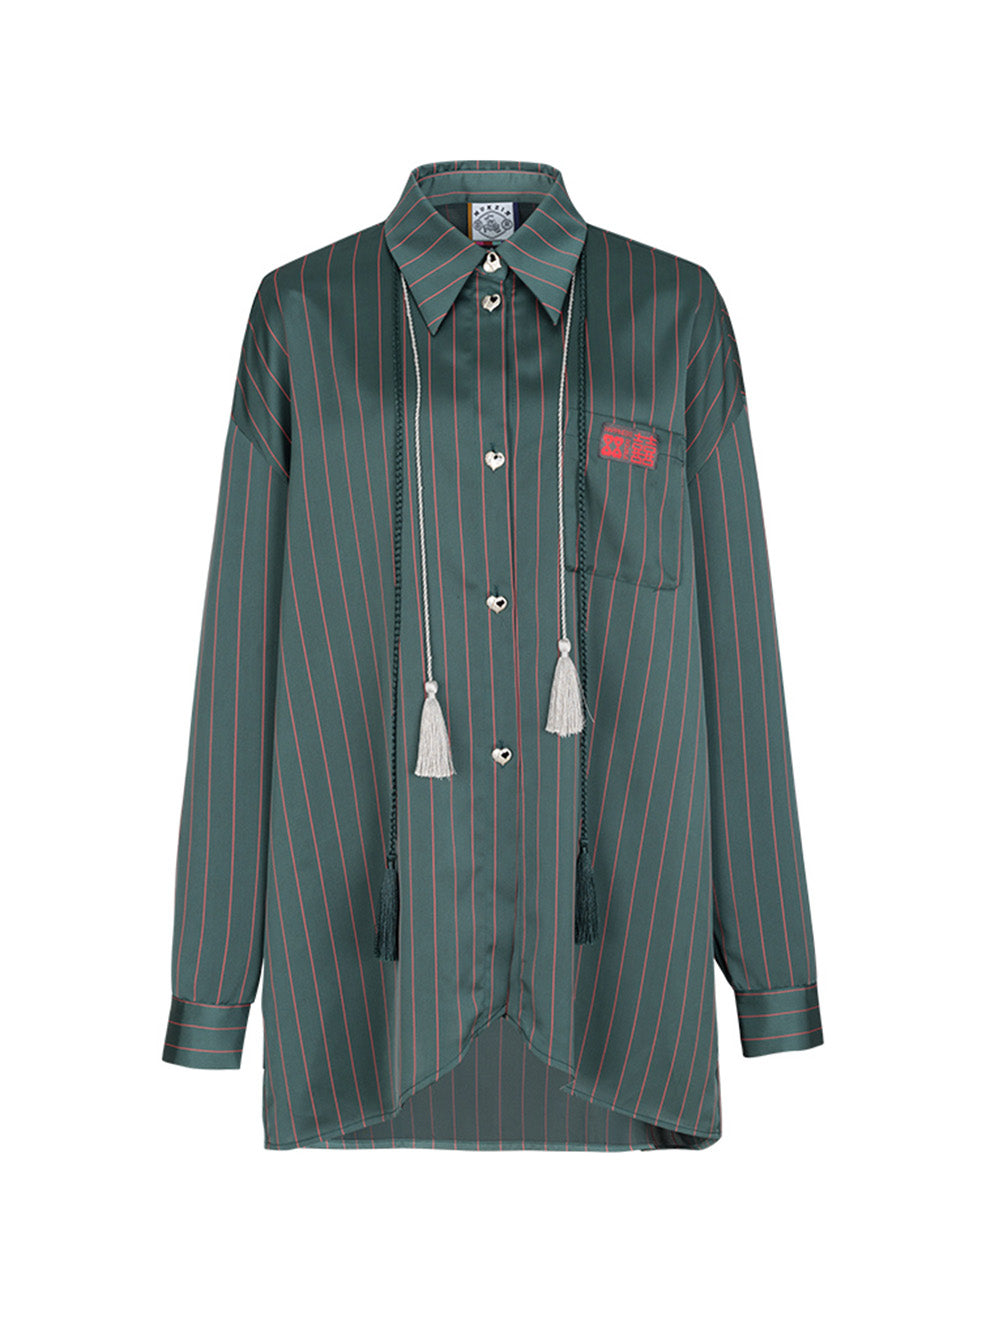 MUKZIN Lapel Drawstring Stripe Green Shirt CNY “year of the tiger” Edition